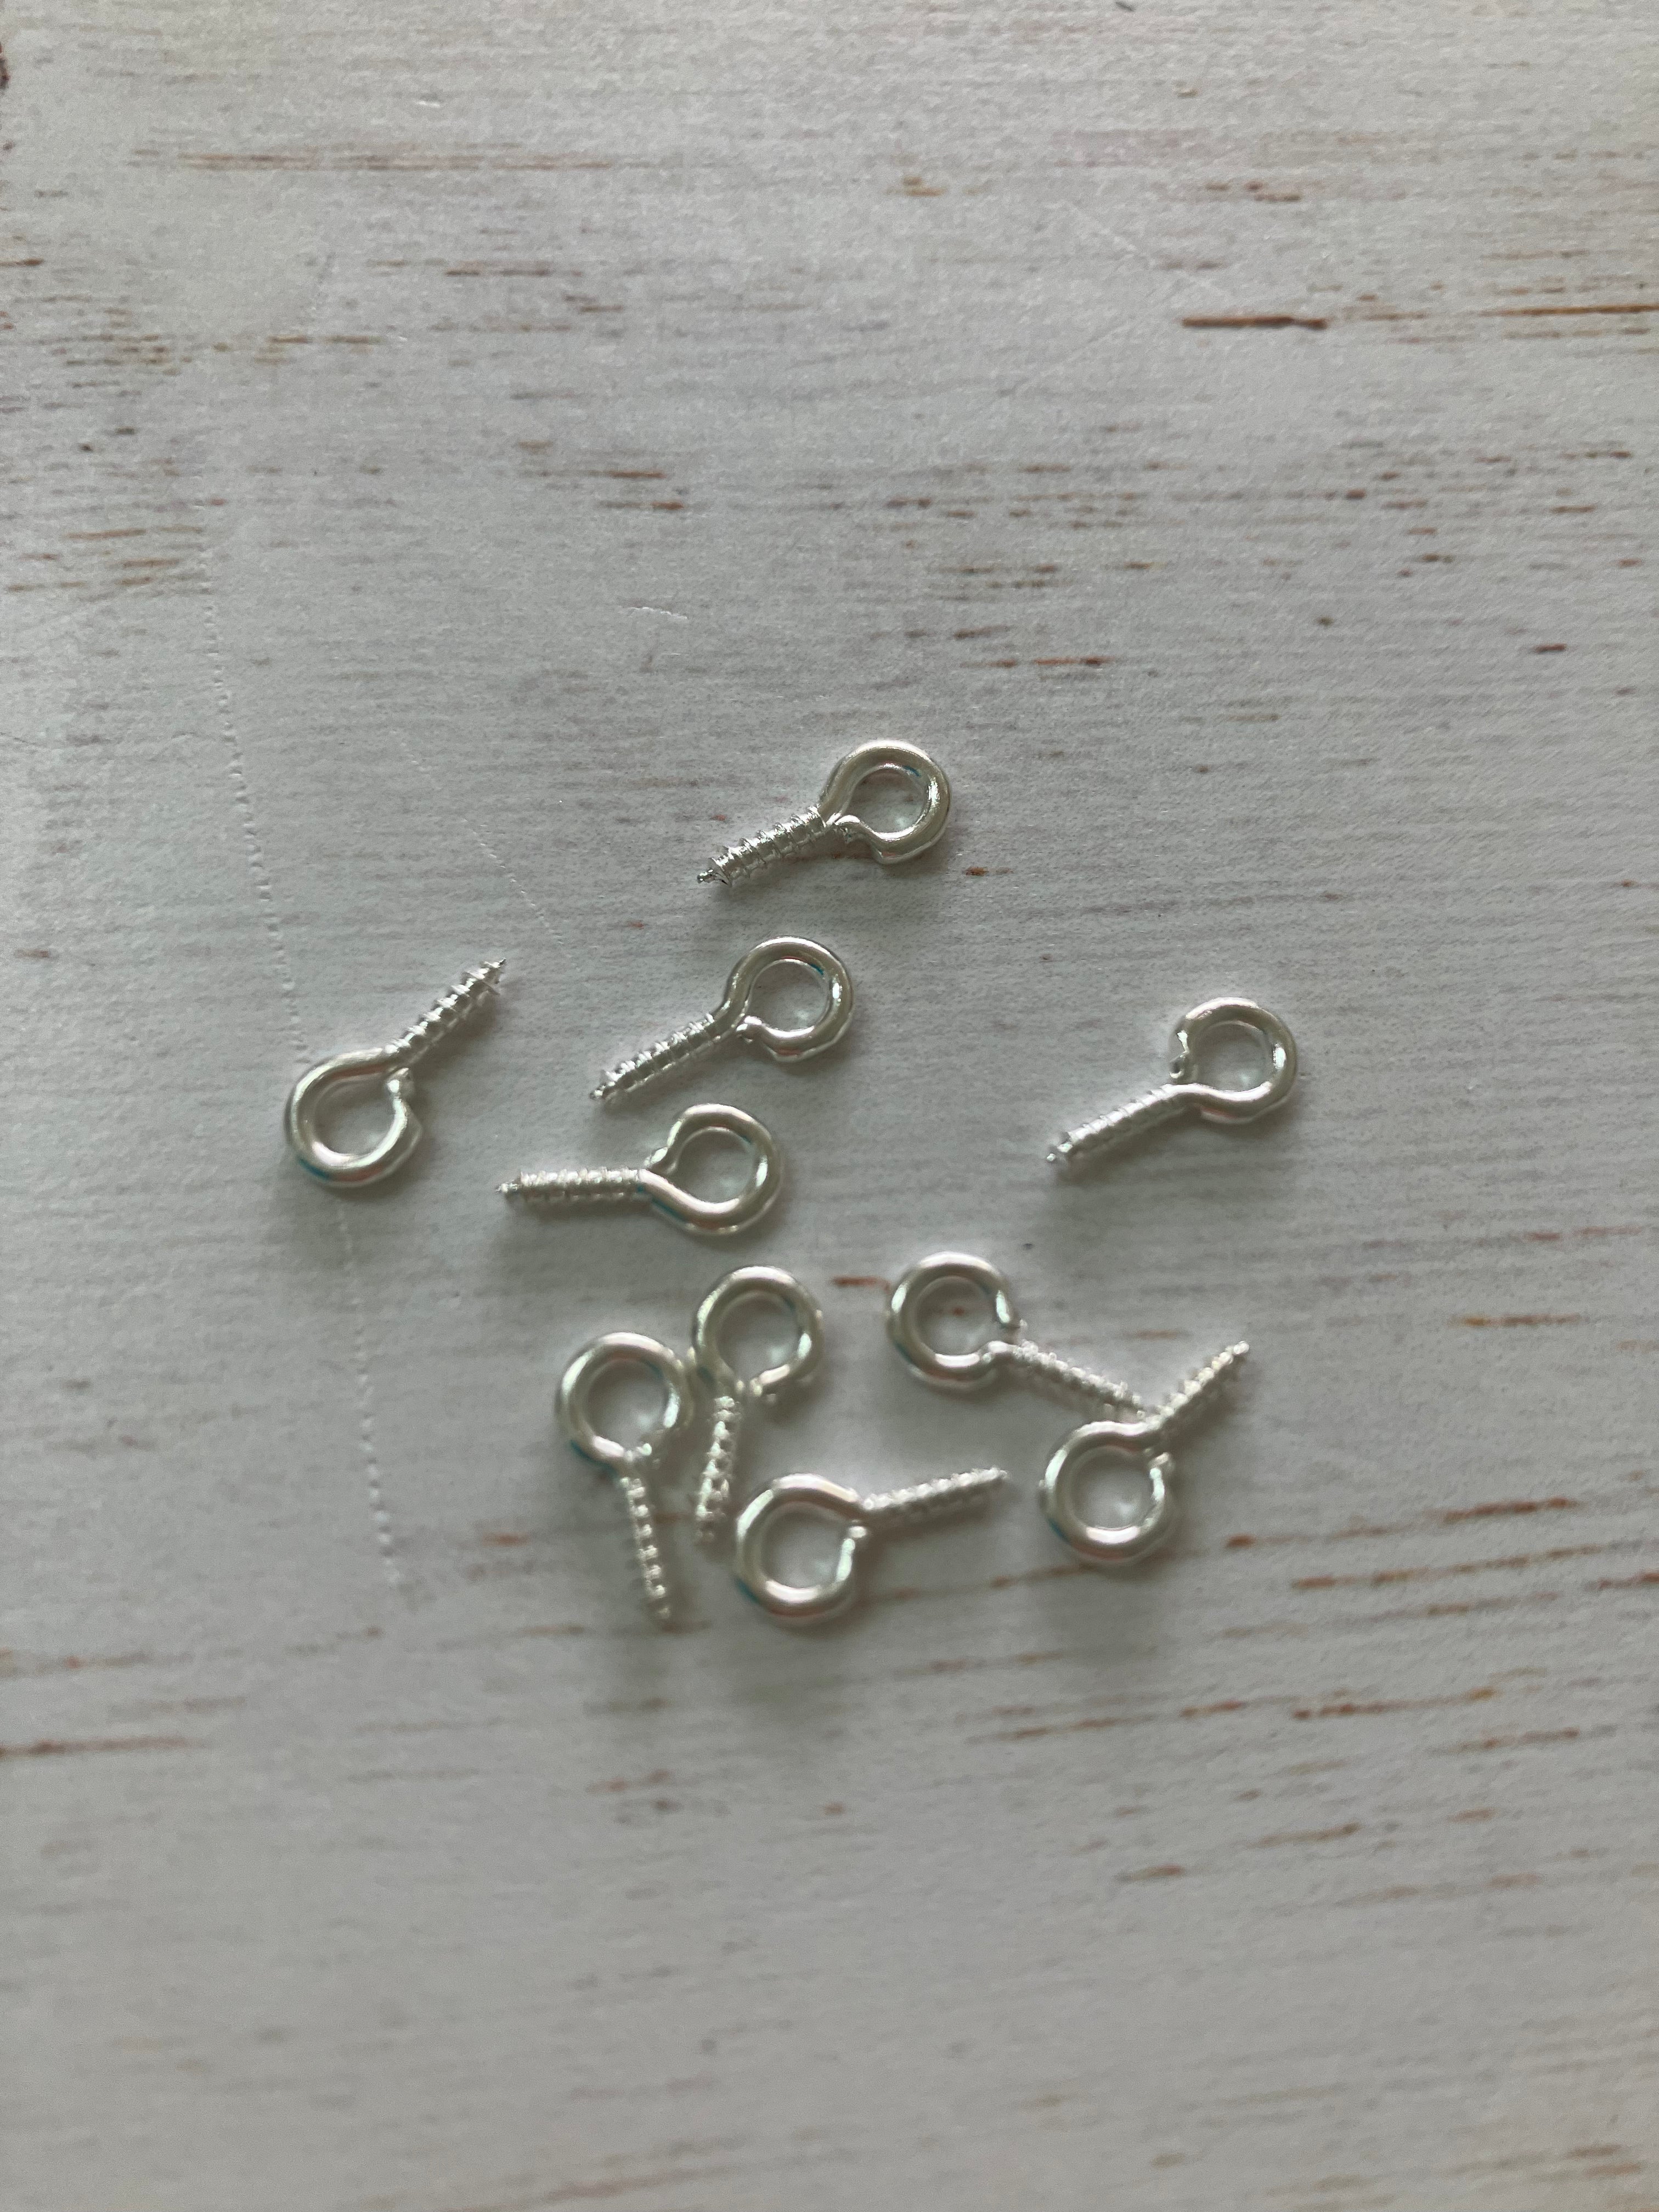 Silver eye pins (10 pins)